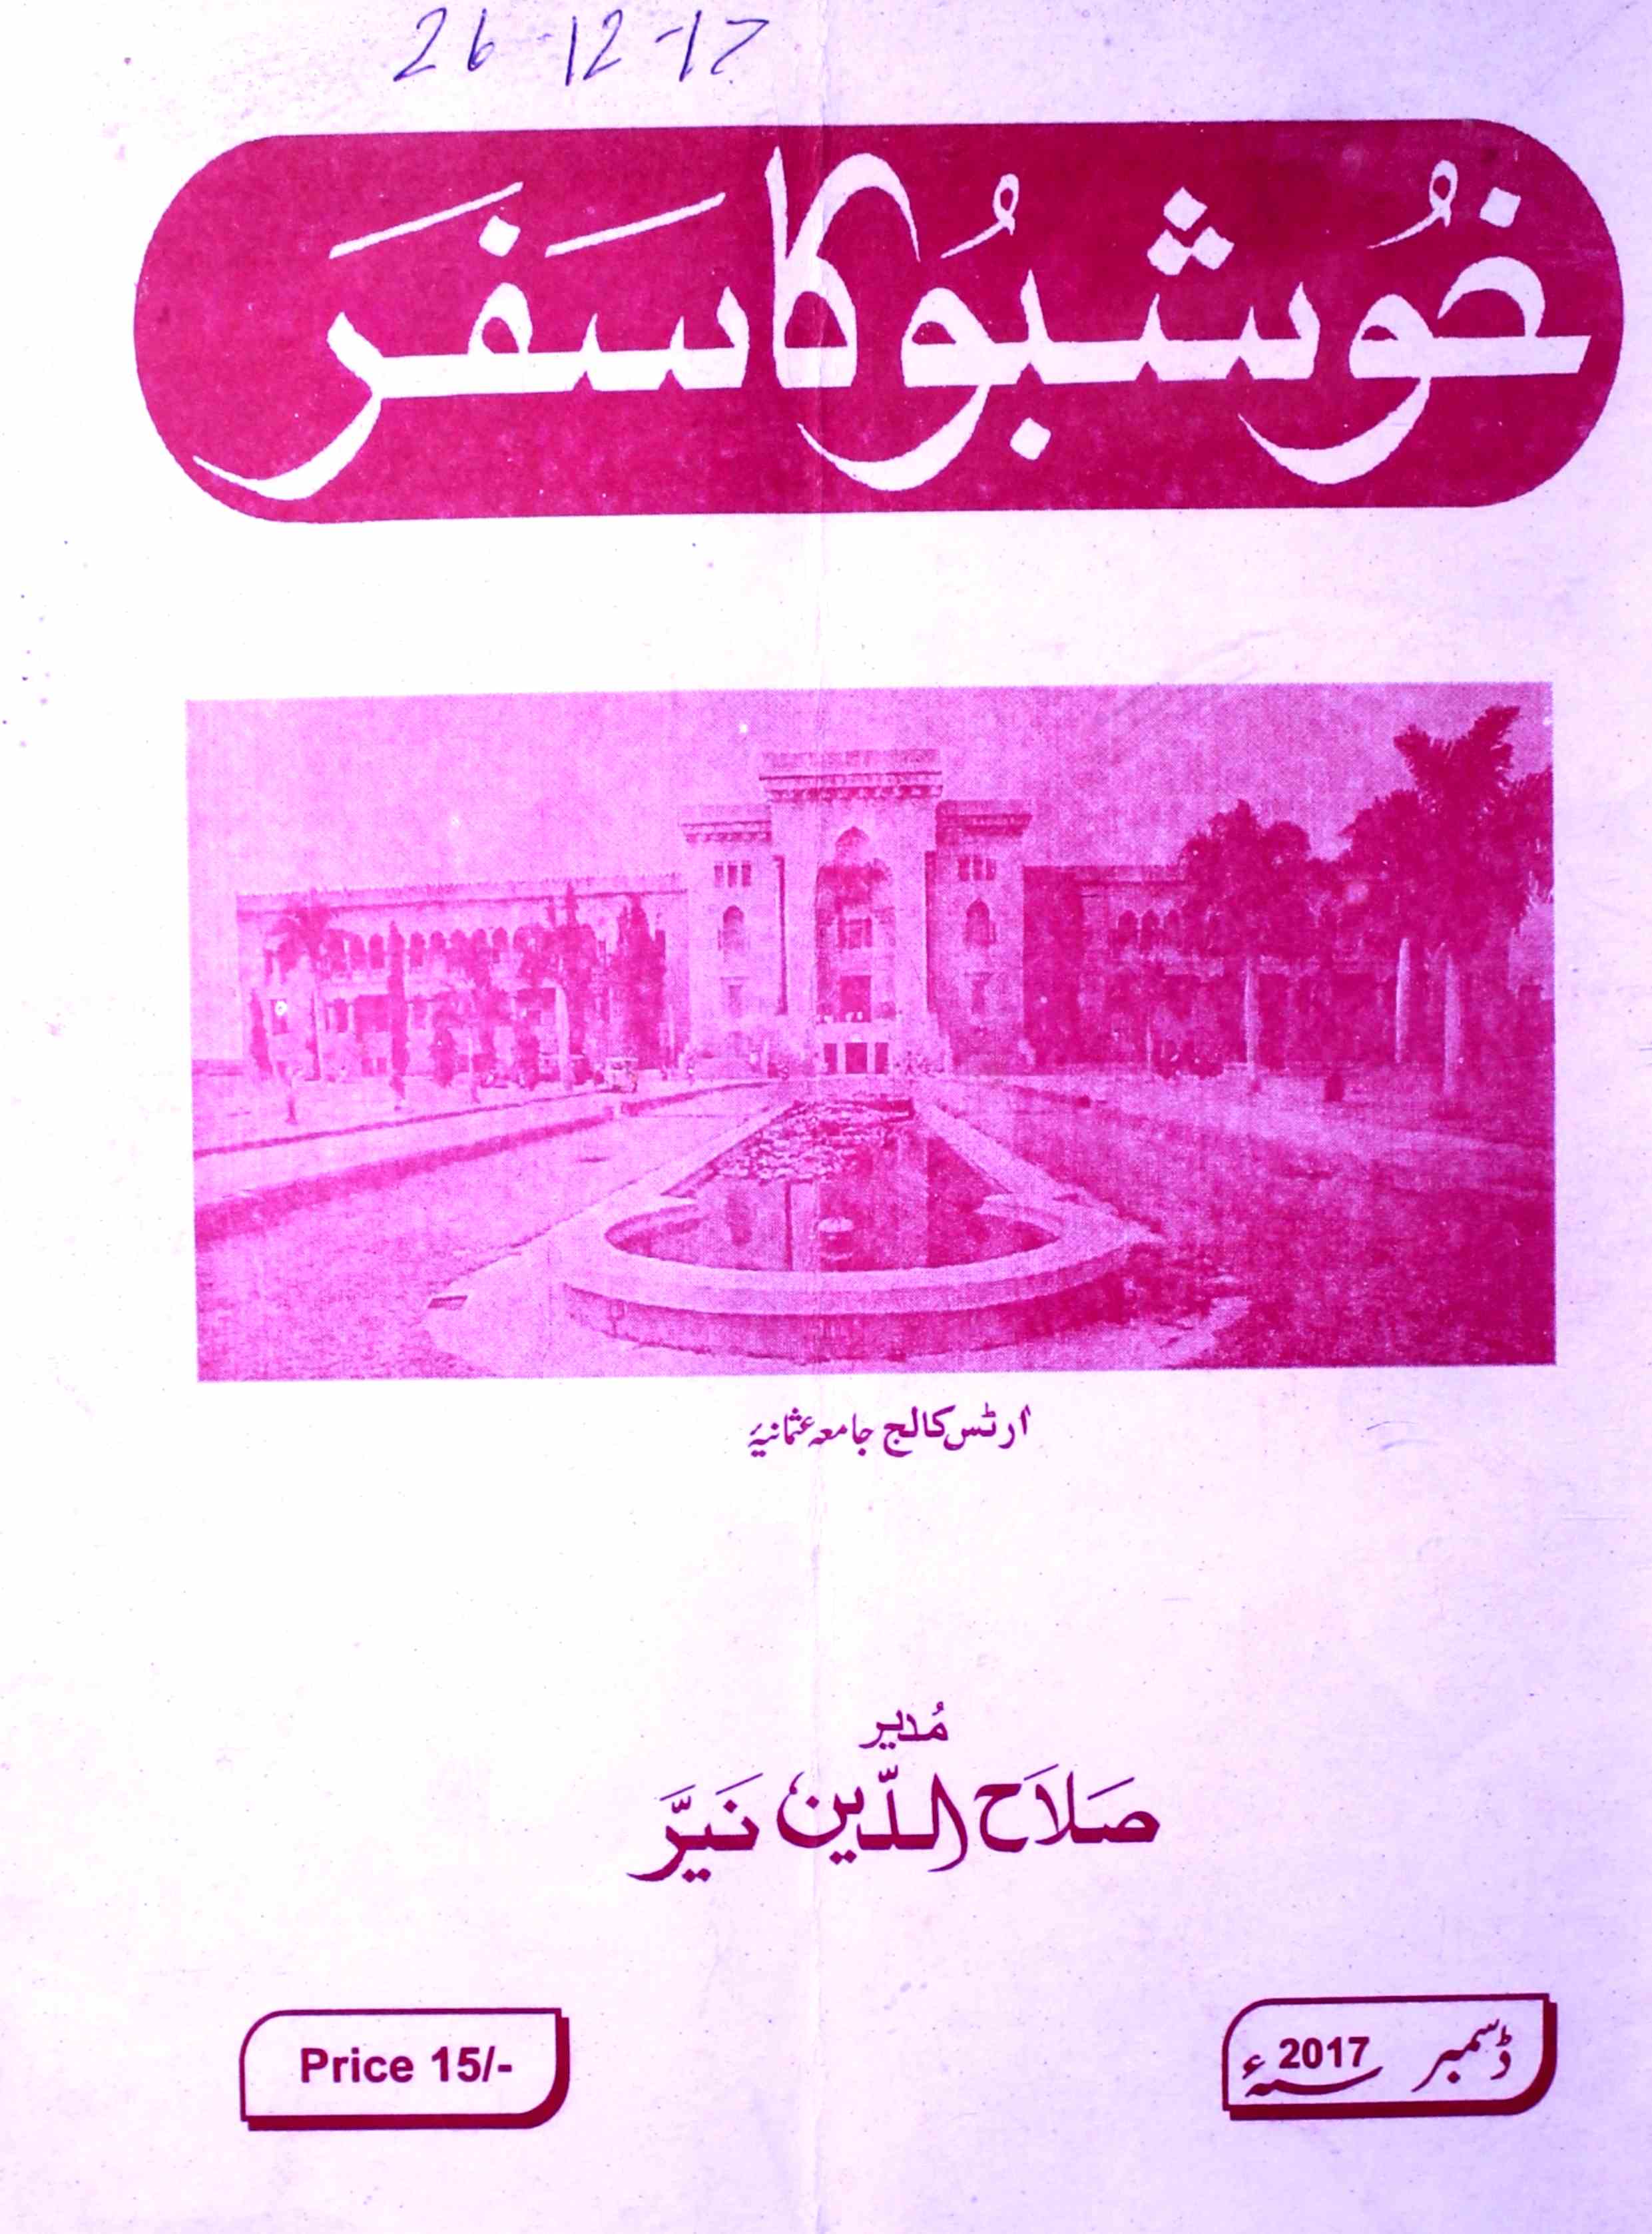 Khushboo ka Safar Jild-22 Shumara-11-Shumara Number-012